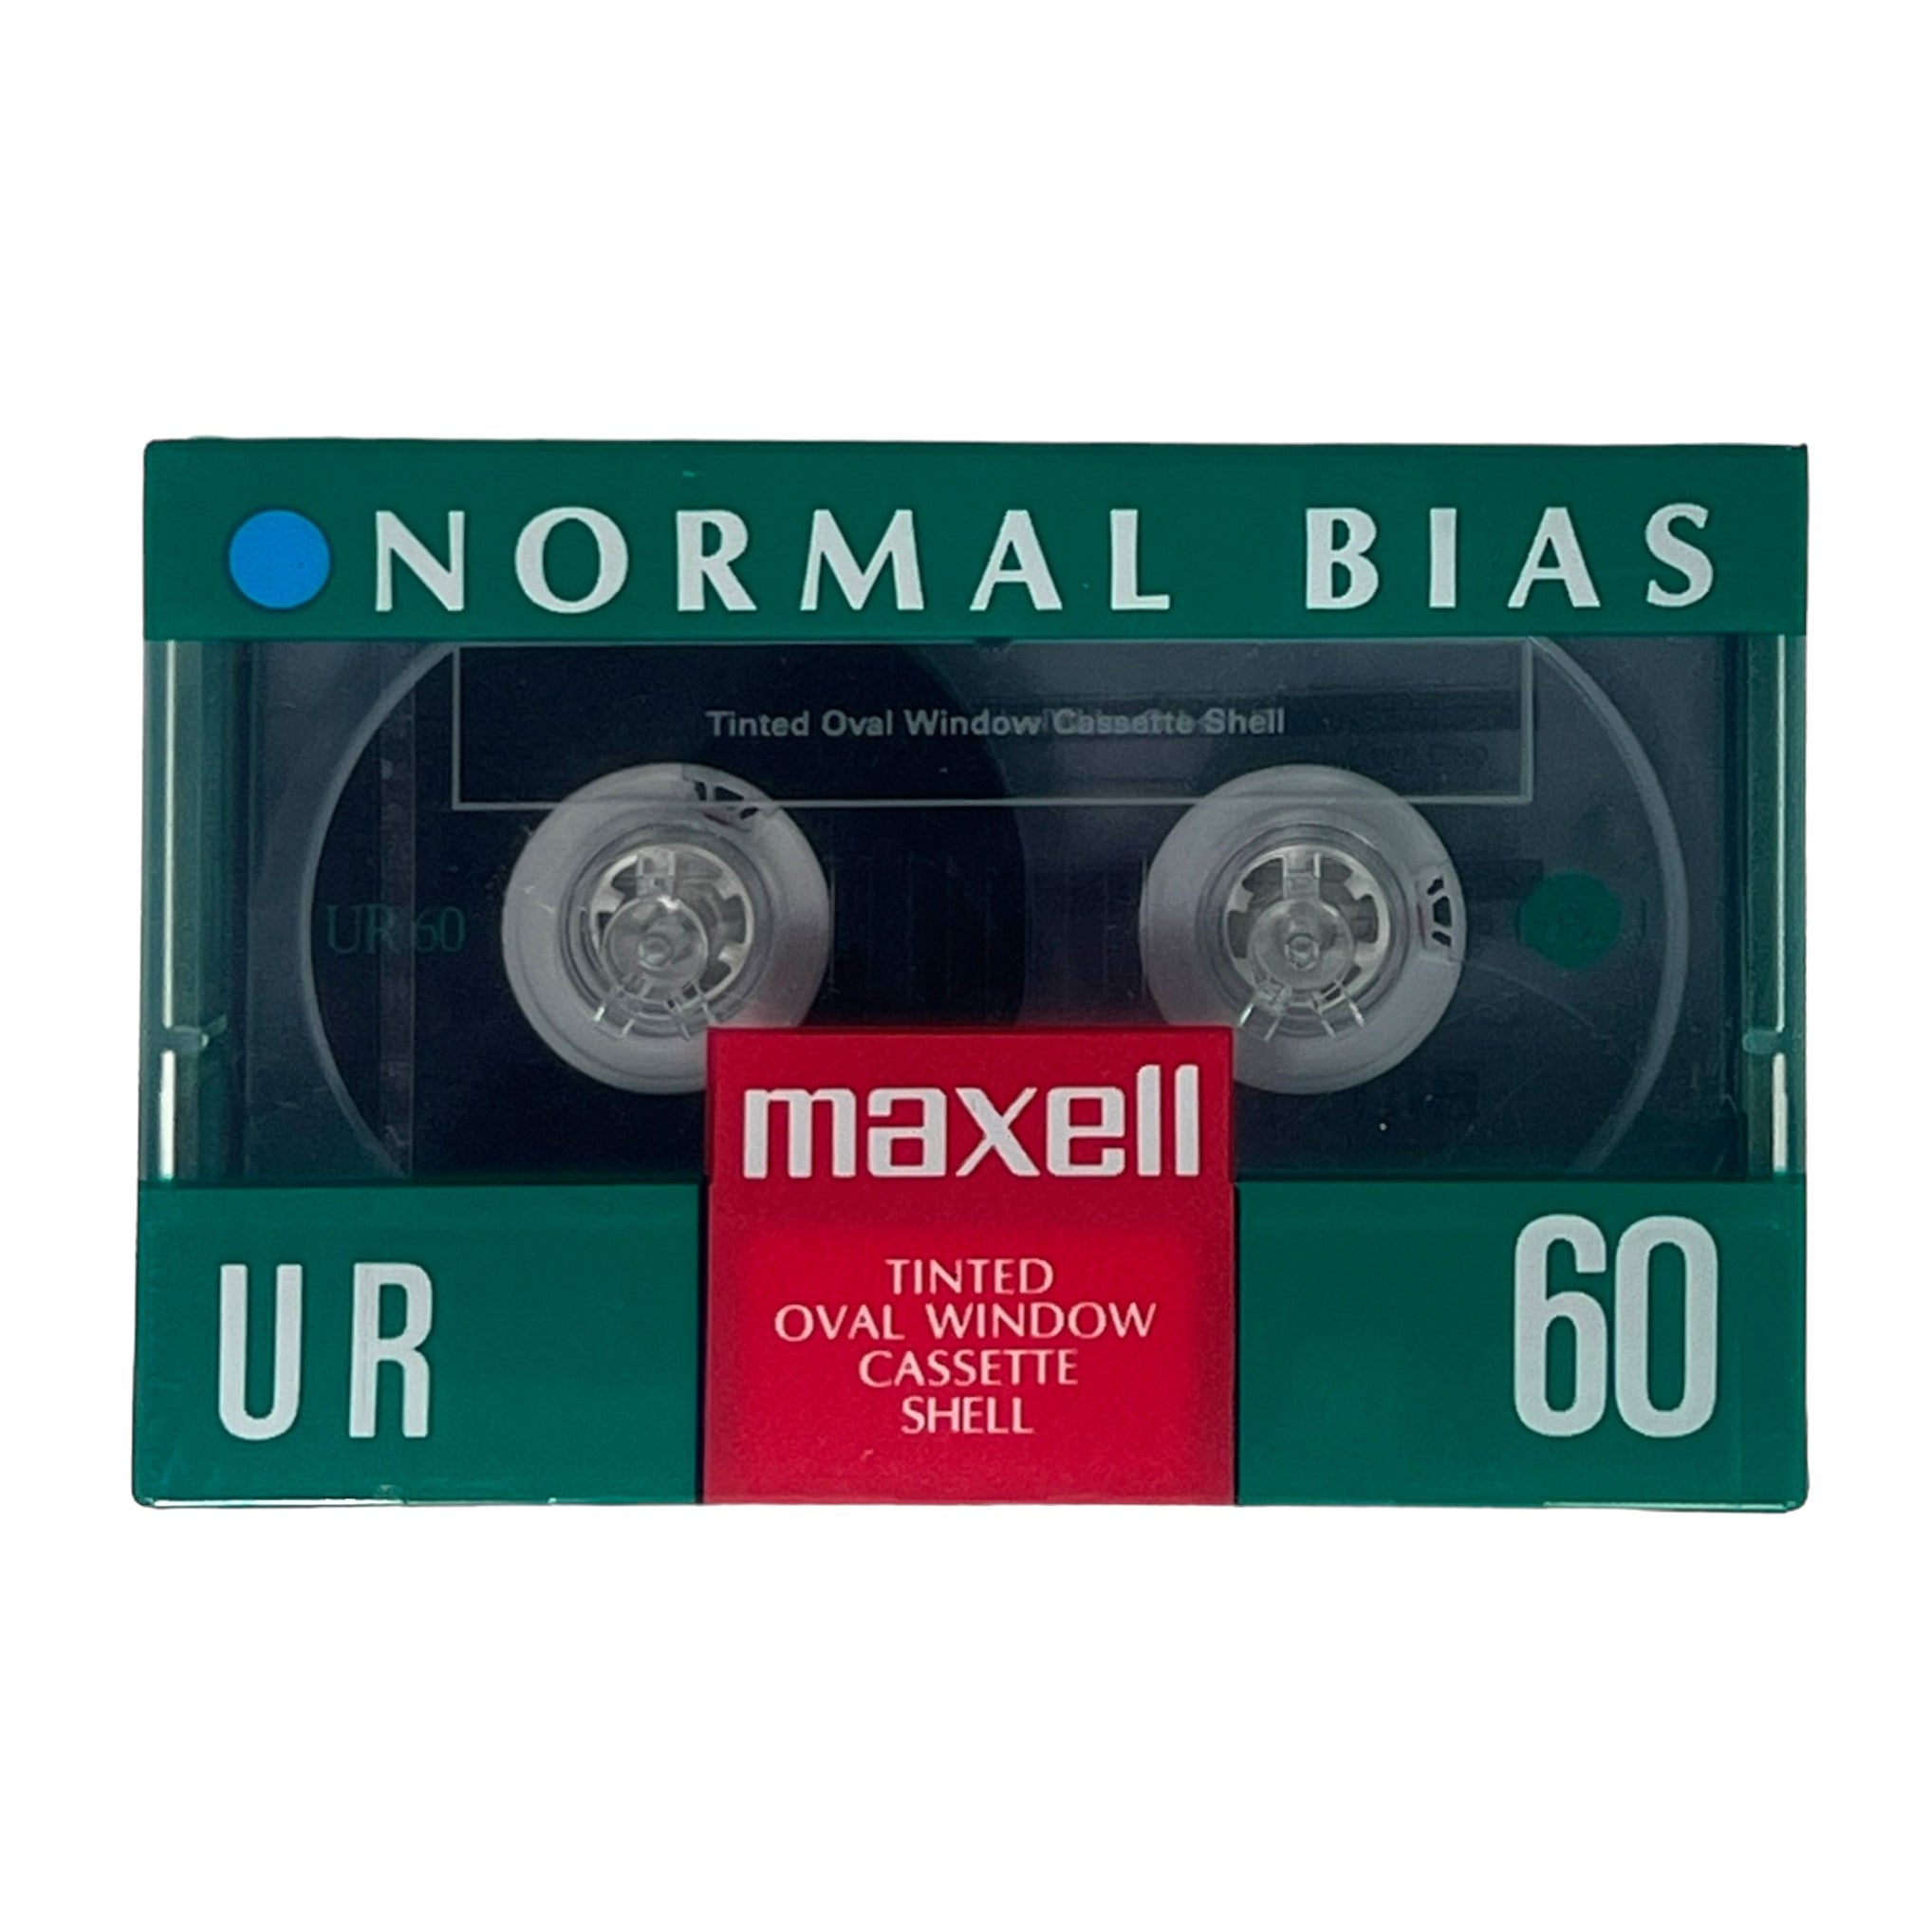 Maxell Audio Cassette UR 60 Normal Bias